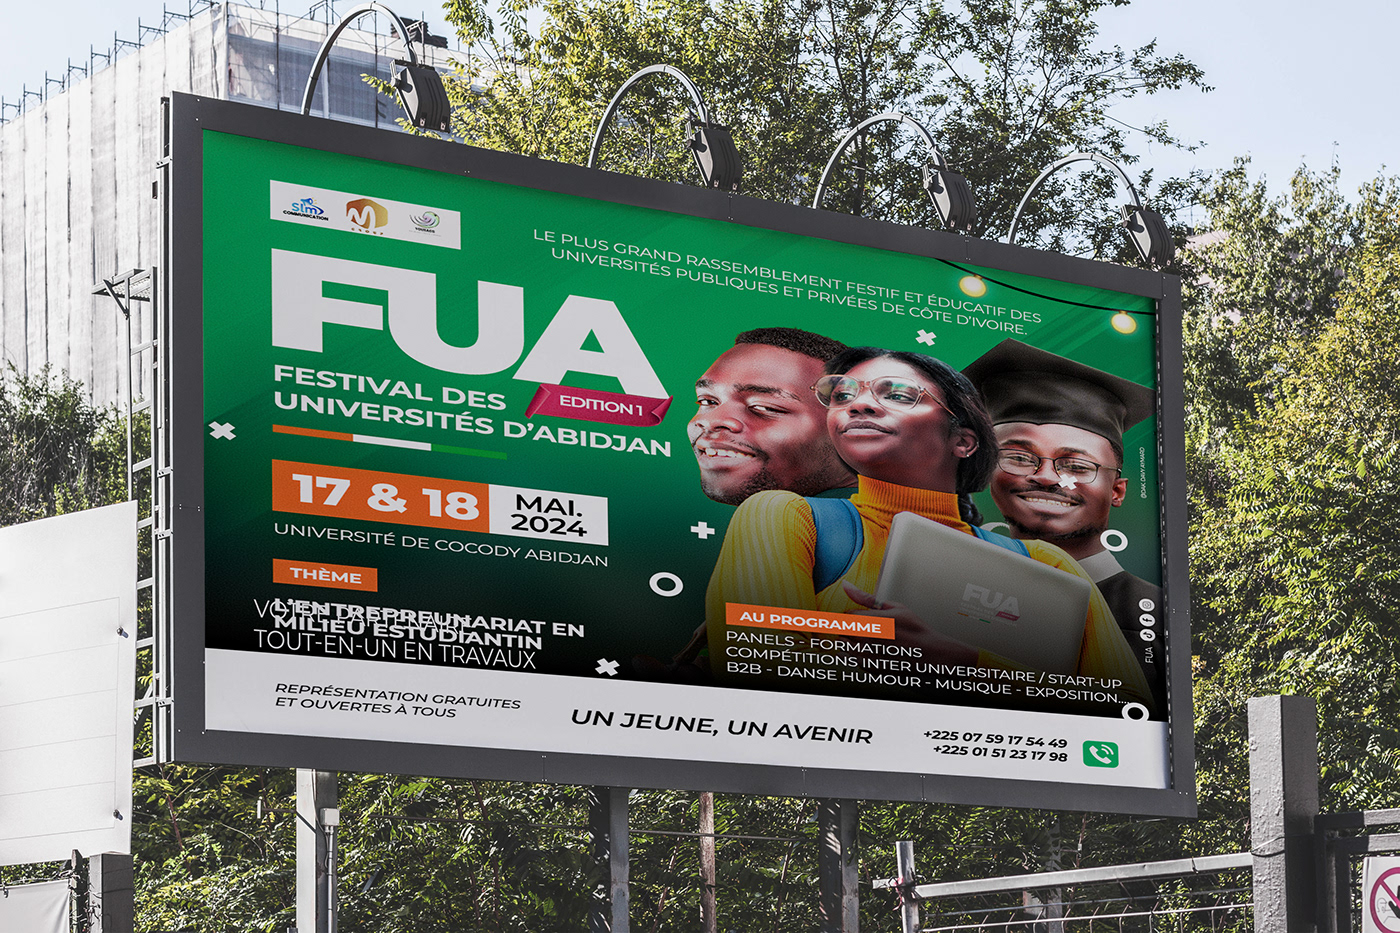 fua campaign Socialmedia post Social media post art direction  banner